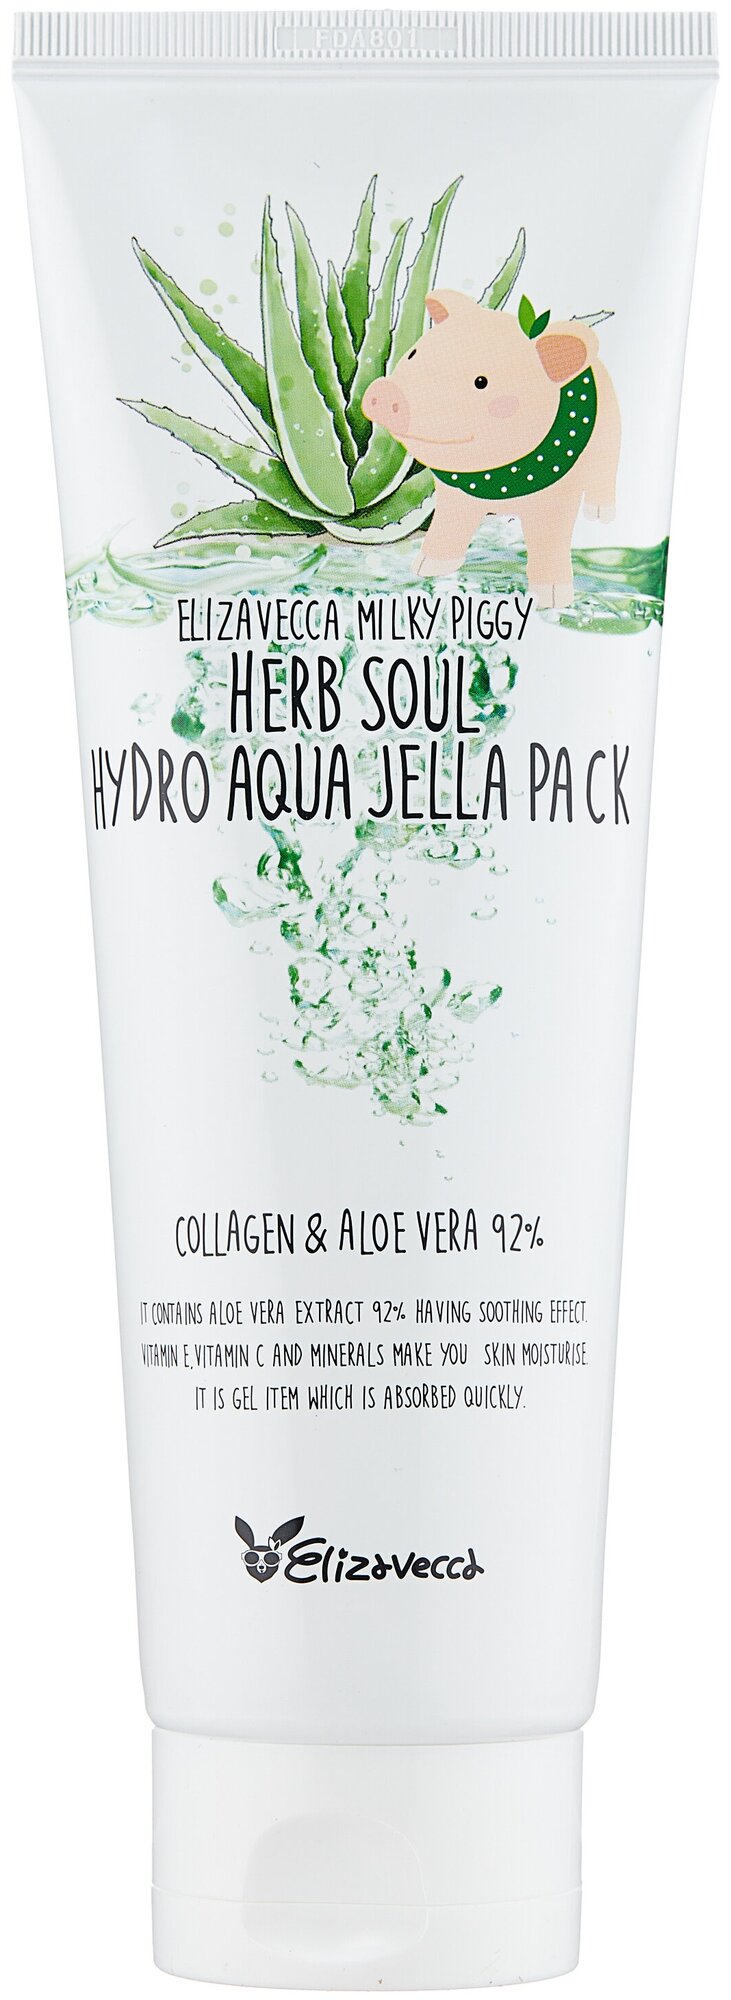 Elizavecca Milky Piggy увлажняющая маска Herb Soul Hydro Aqua Jella Pack